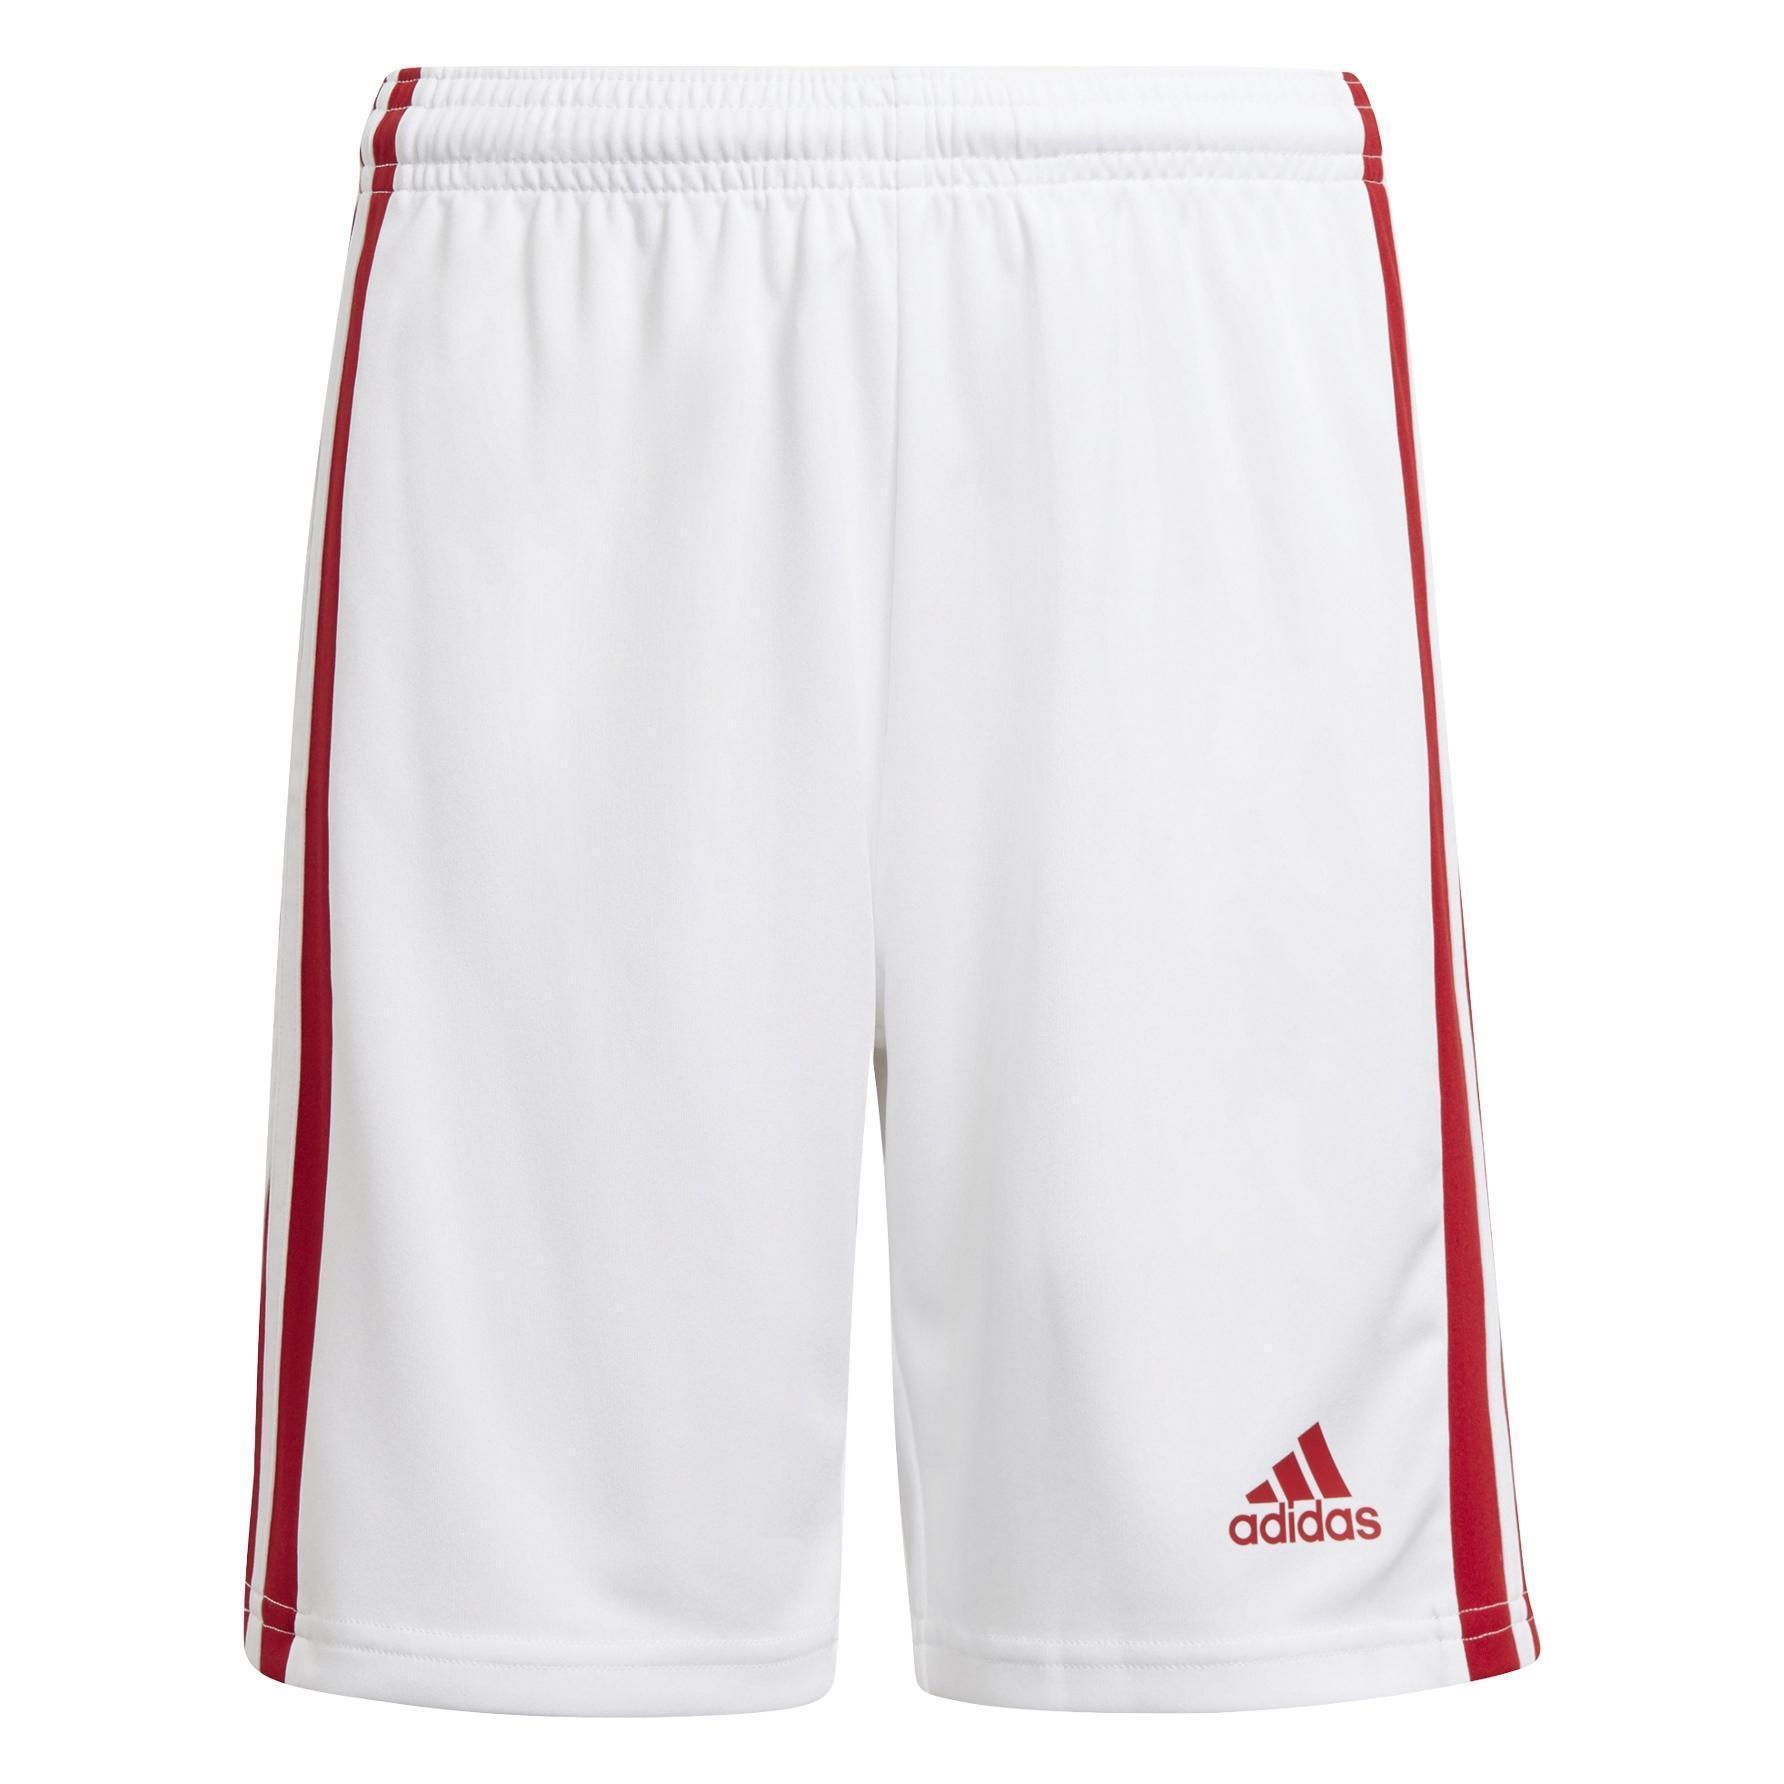 adidas shorts adidas gn5770. da uomo, colore bianco